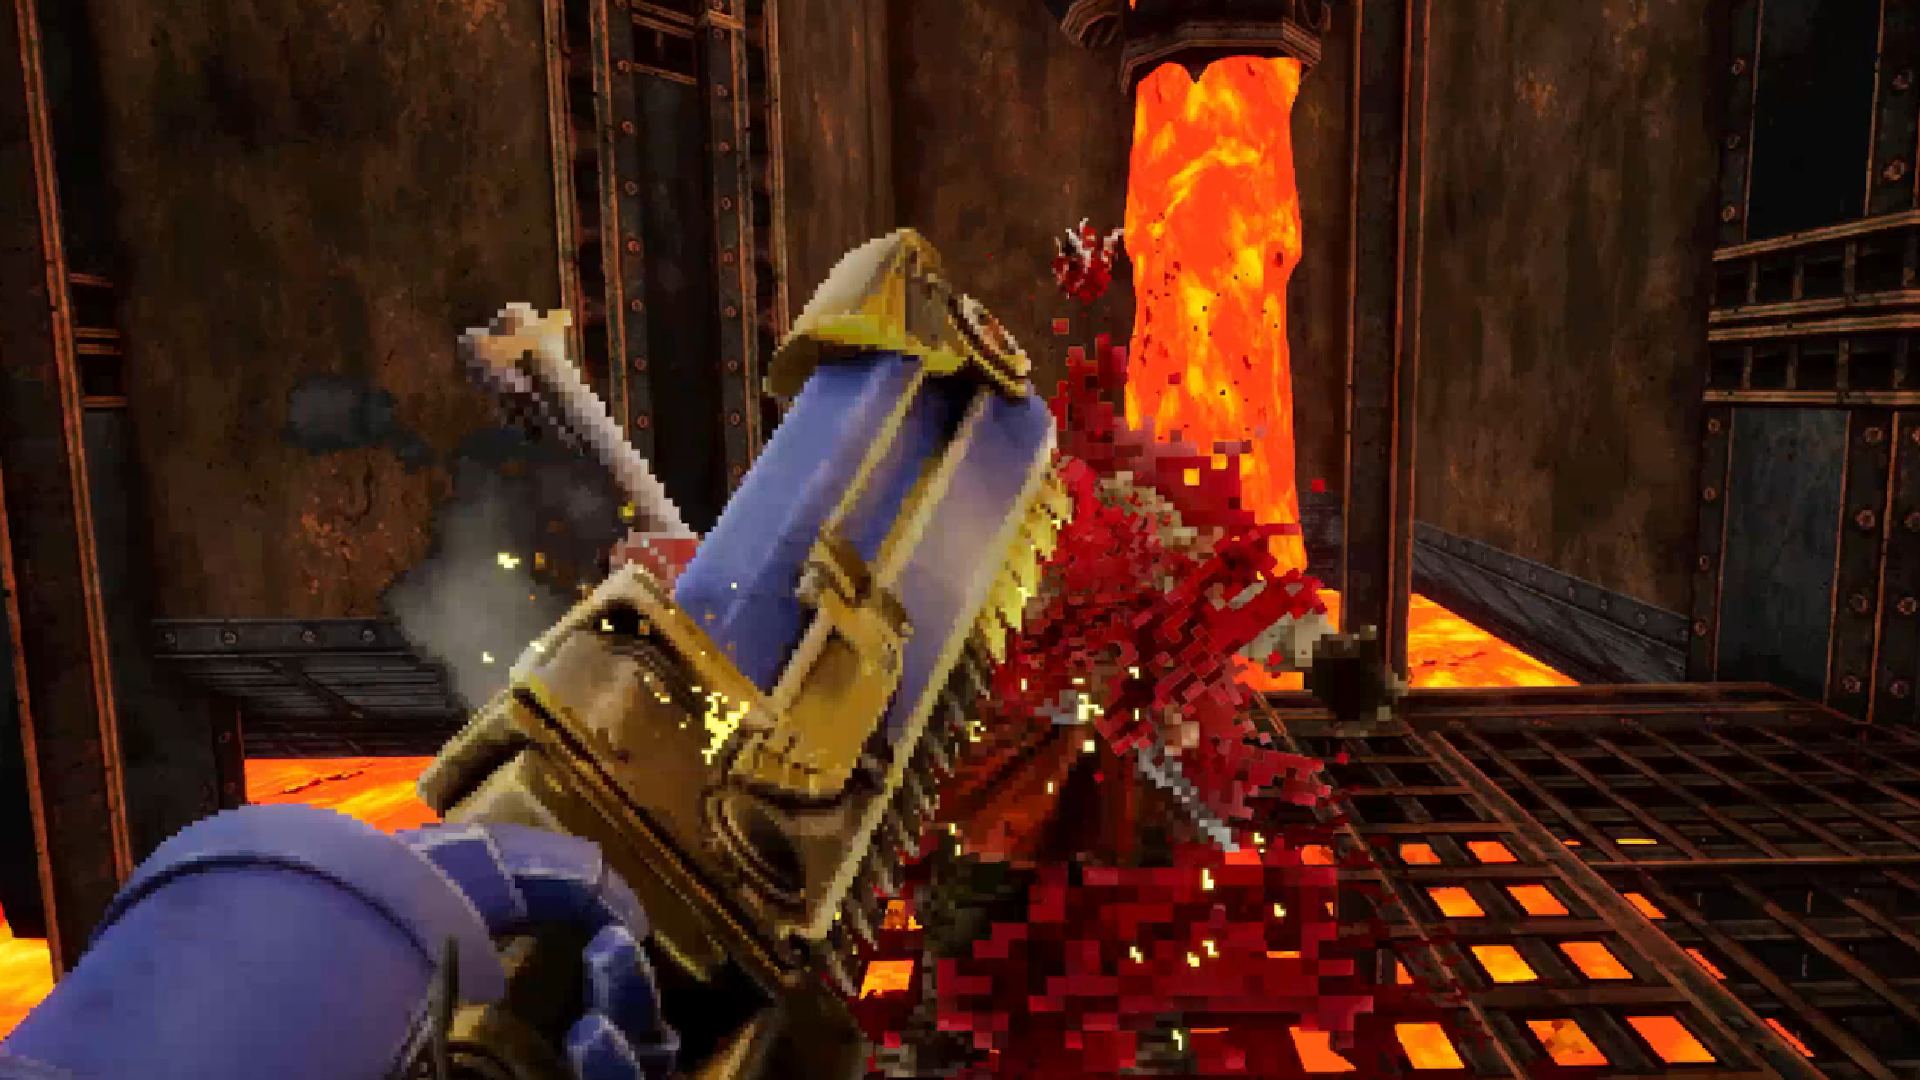 Warhammer 40K Boltgun Release Date: A player can be seen using their chainsword